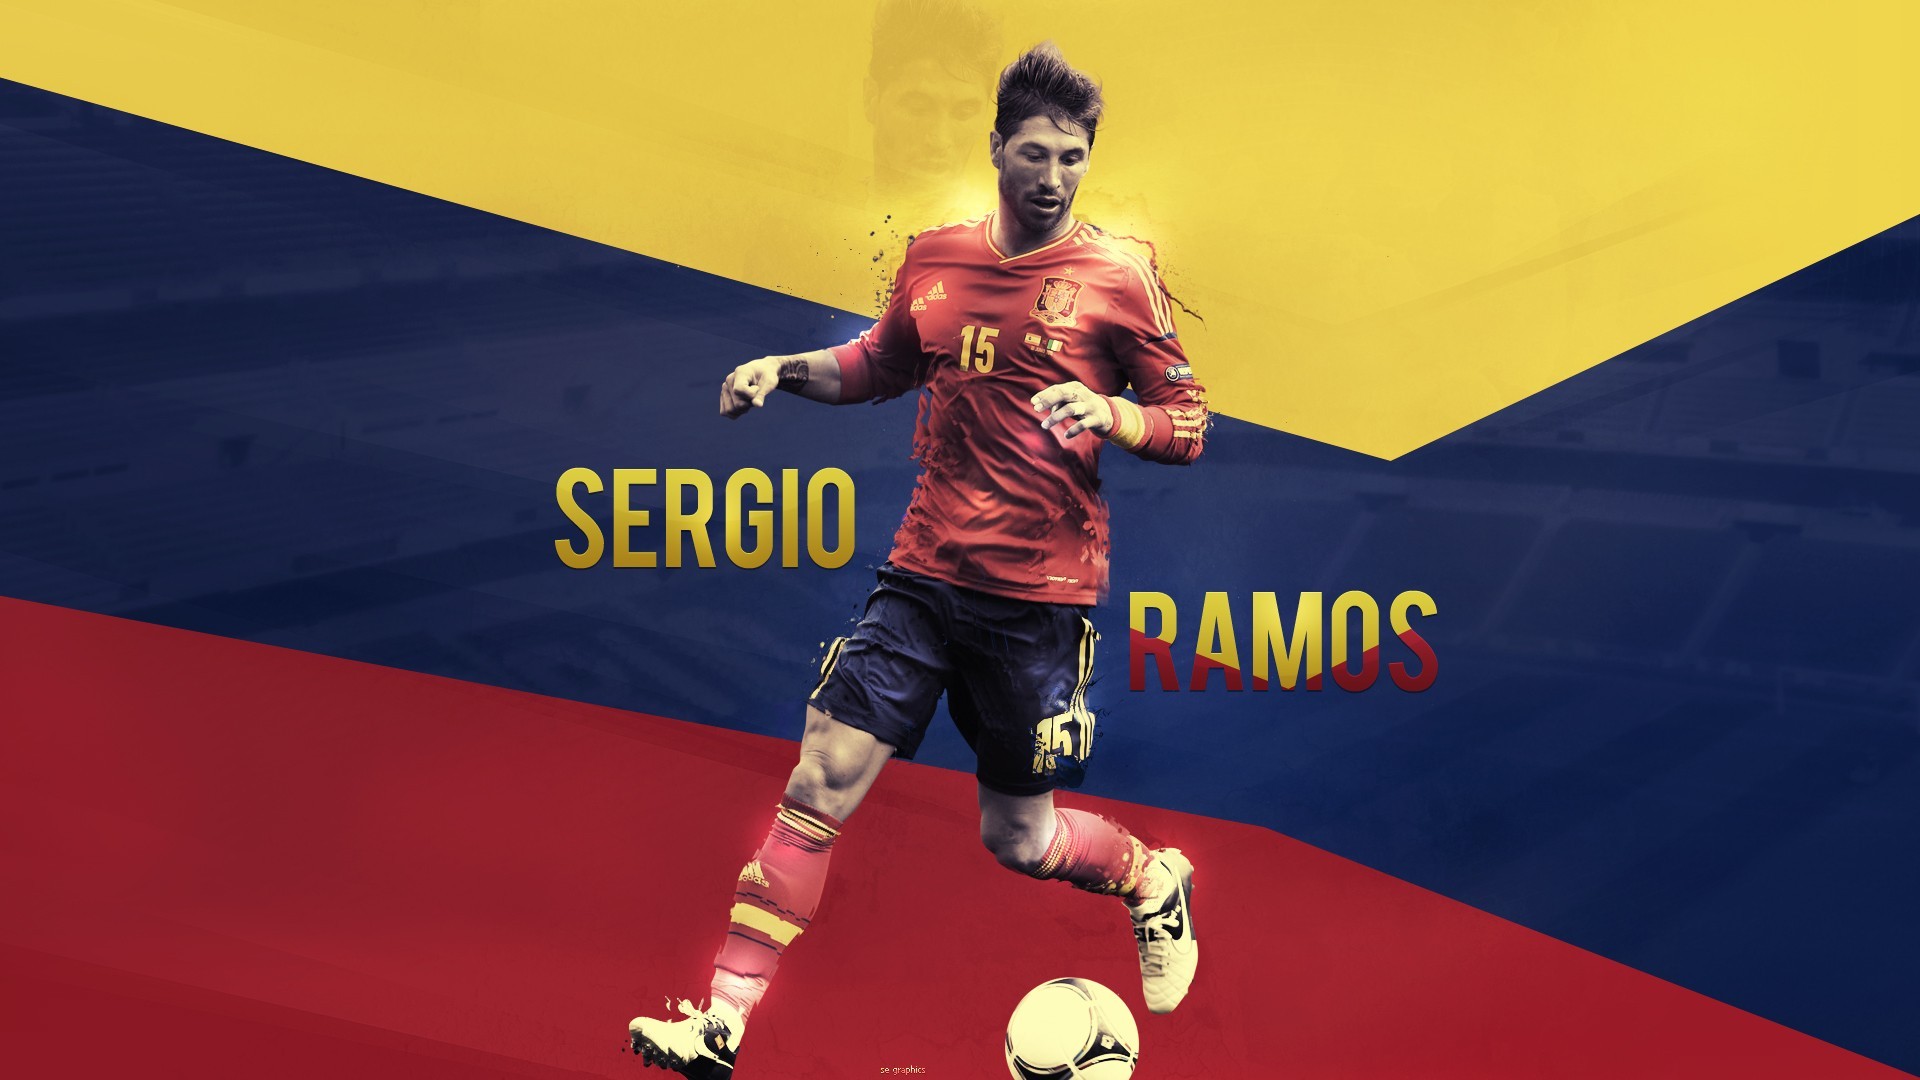 People 1920x1080 Sergio Ramos men soccer ball sport Spanish text digital art